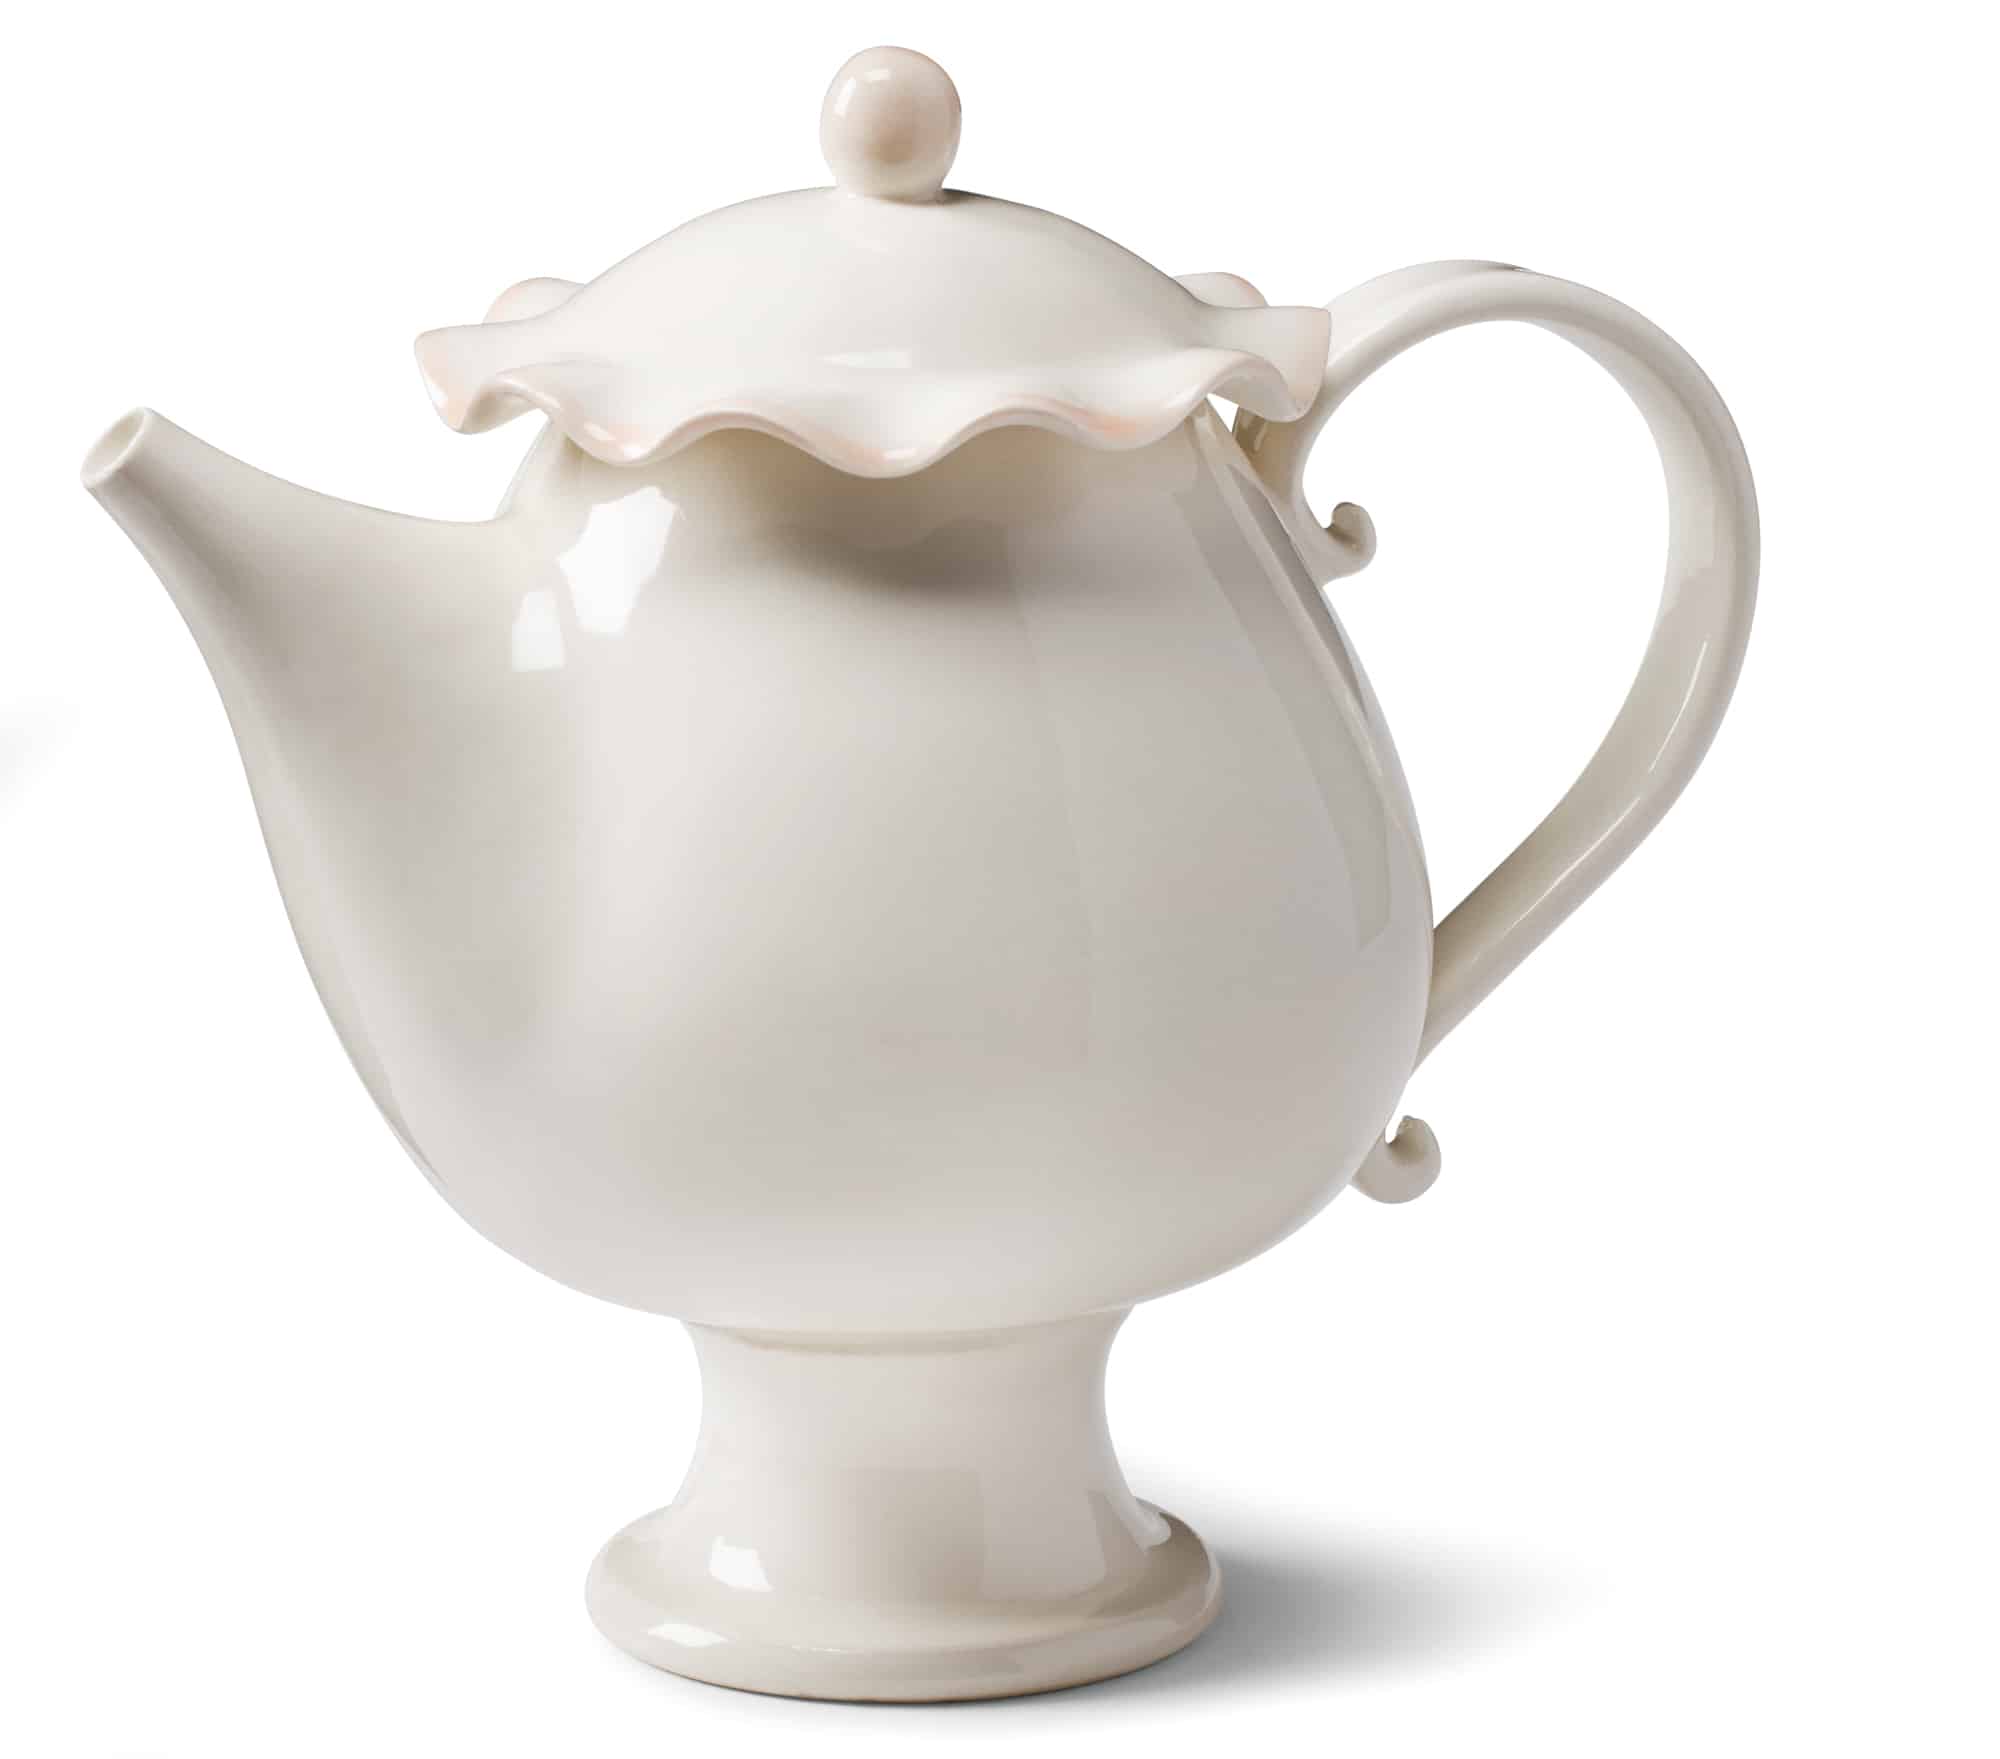 Porcelain tea pot $100 by Stéphanie Goyer-Morin